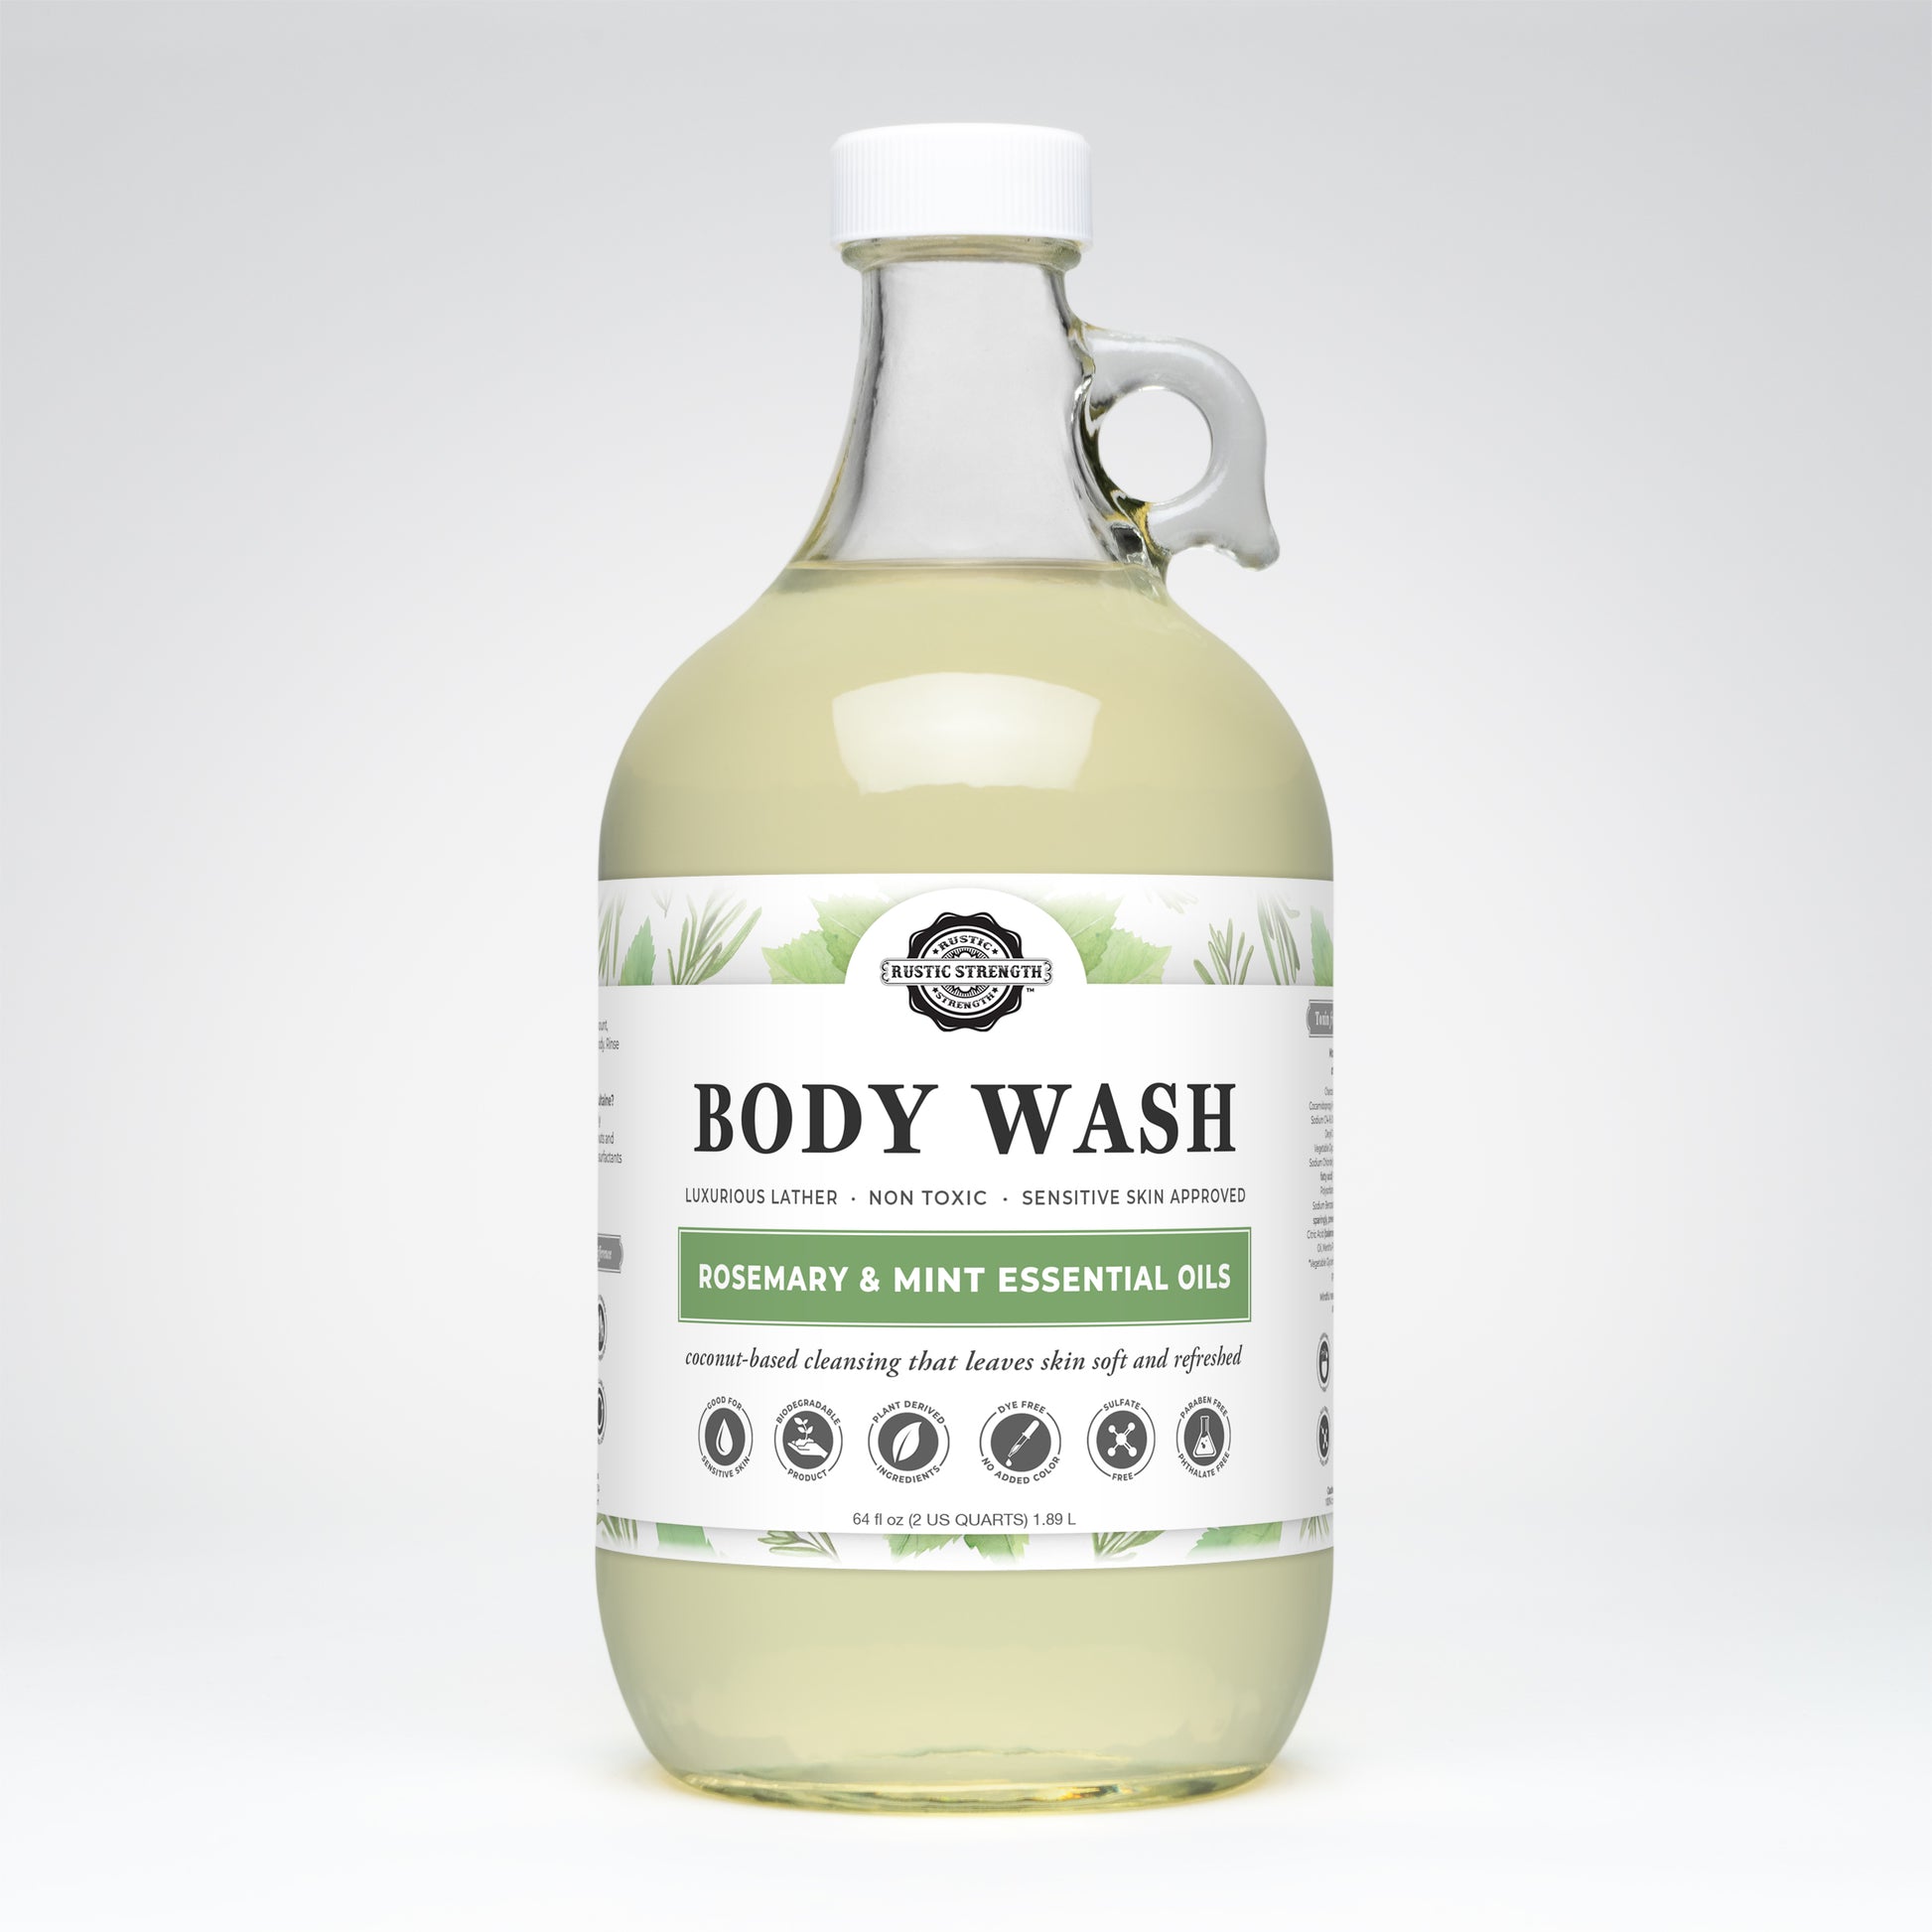 Body Oil Scented - 16oz - up & up™  Body oil, Moisturizing body oil,  Soften skin